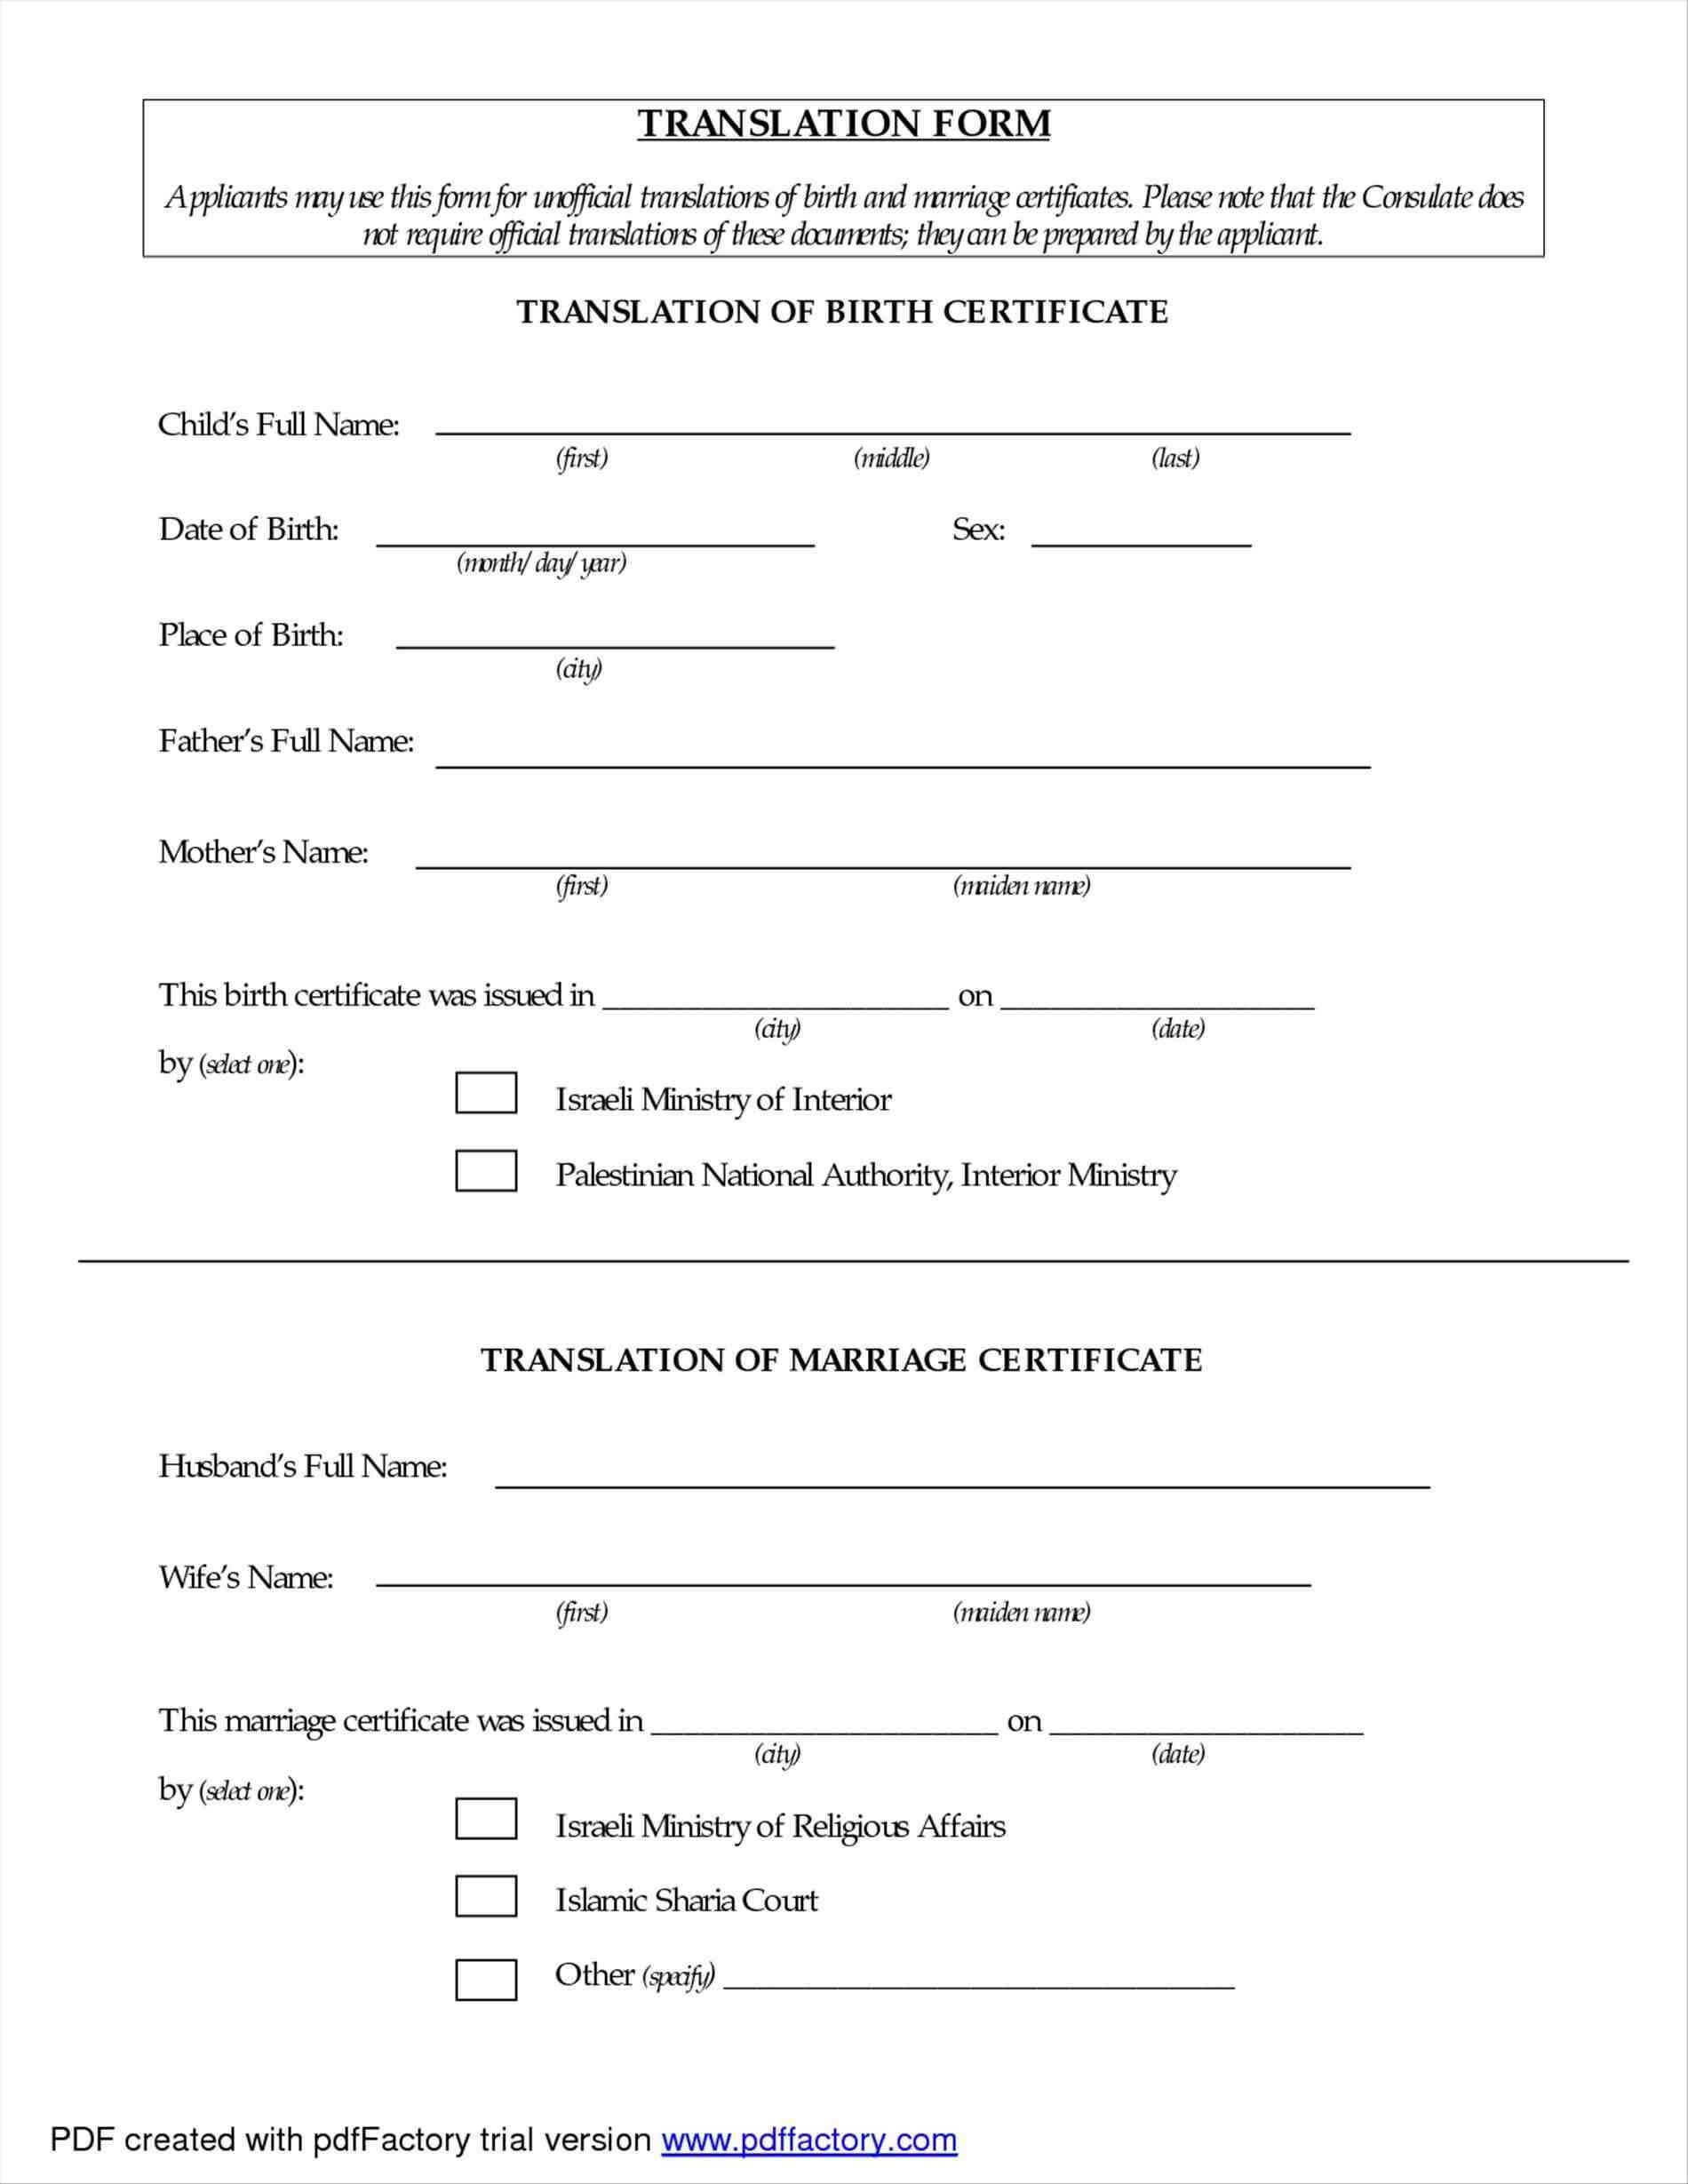 021 Large Certificate Of Marriage Template Beautiful Ideas Regarding Marriage Certificate Translation Template